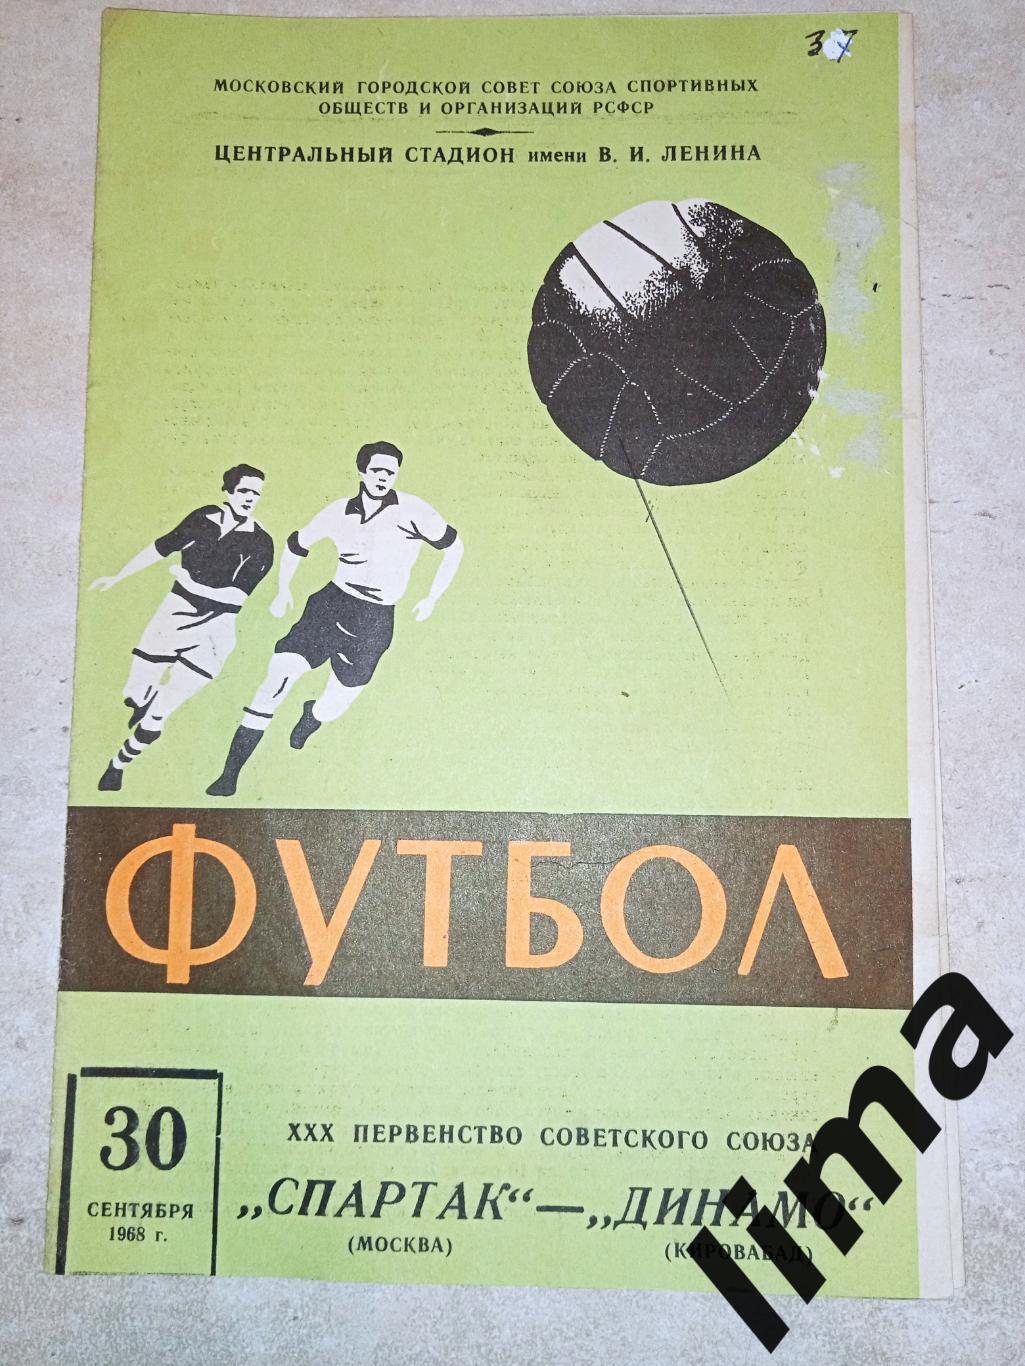 Спартак Москва - Динамо Кировобад 30.09.1968